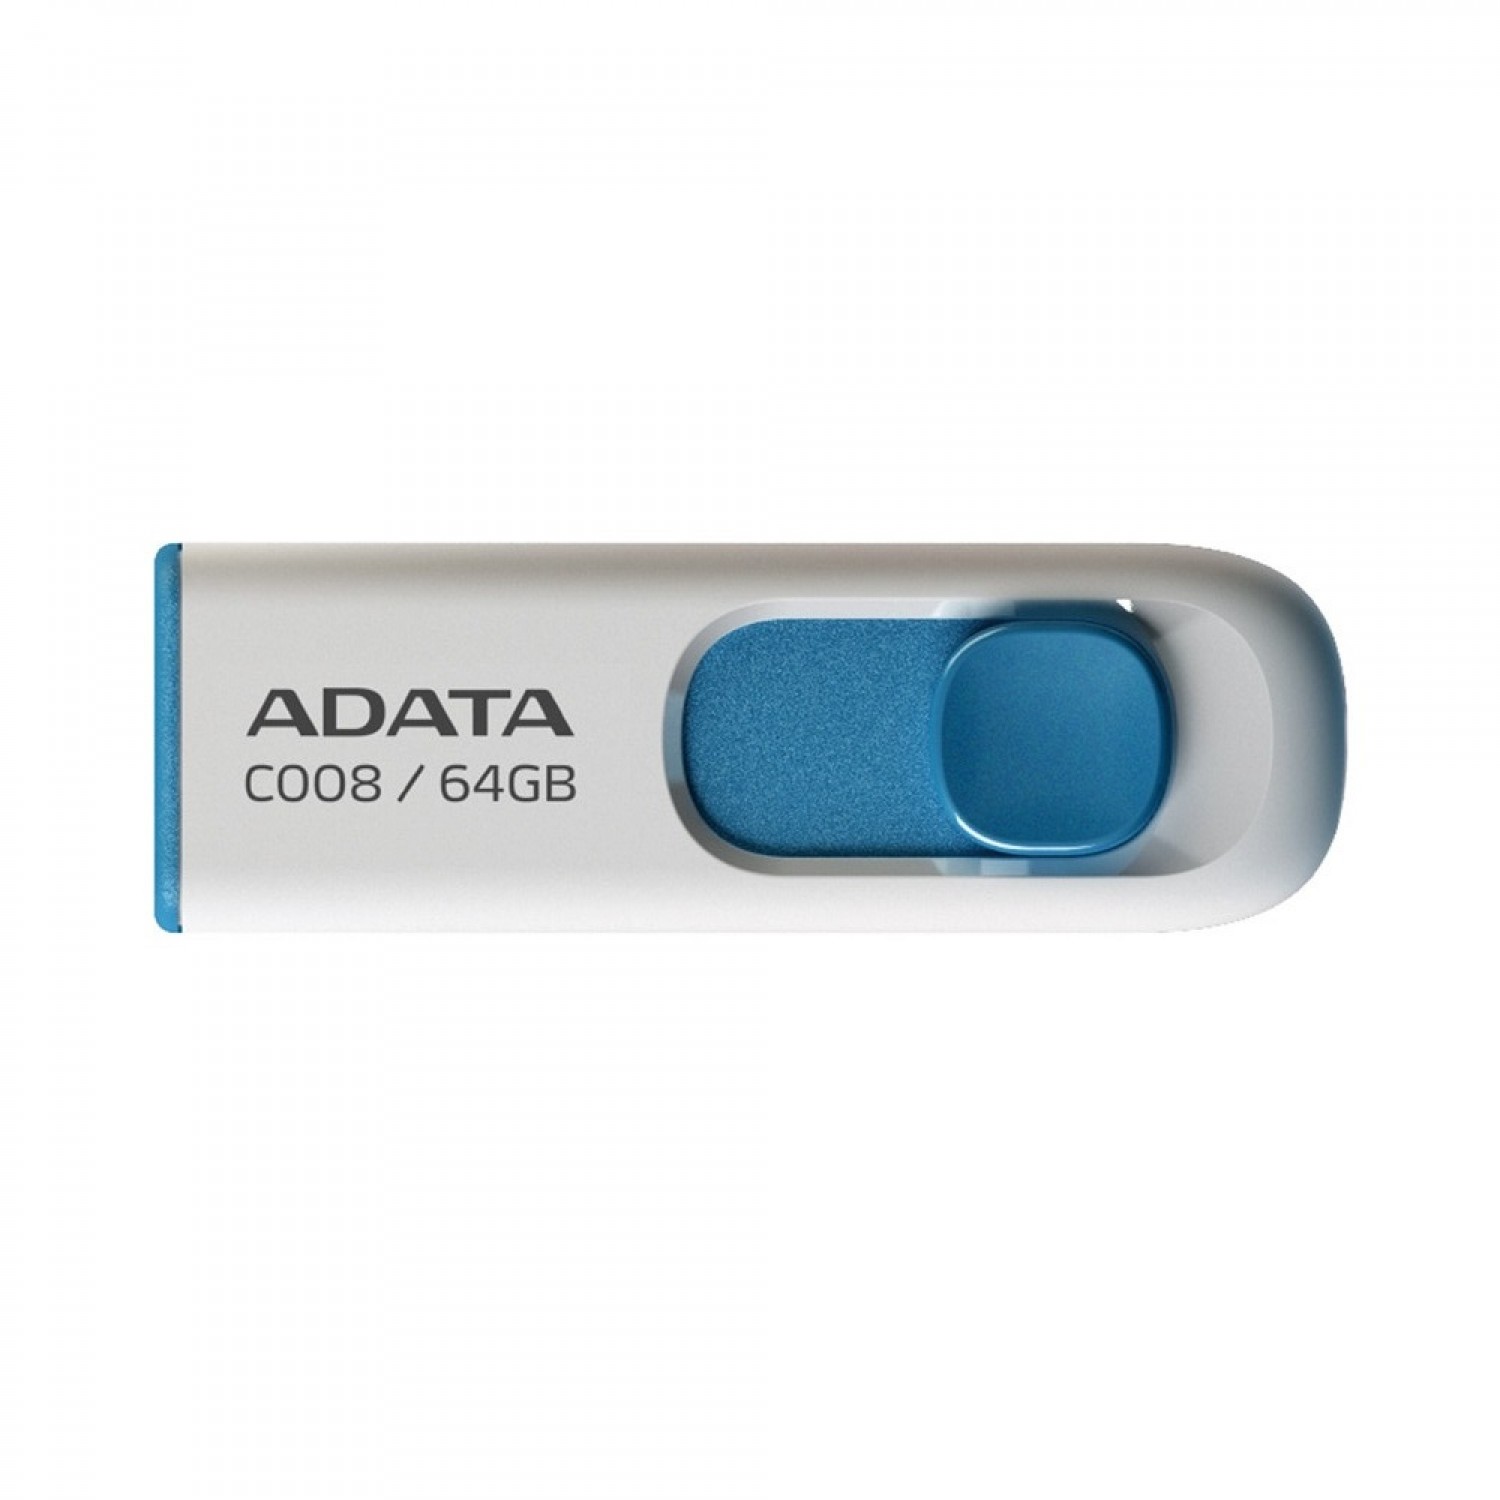 فلش مموری ADATA C008 - 64GB - White/Blue-1